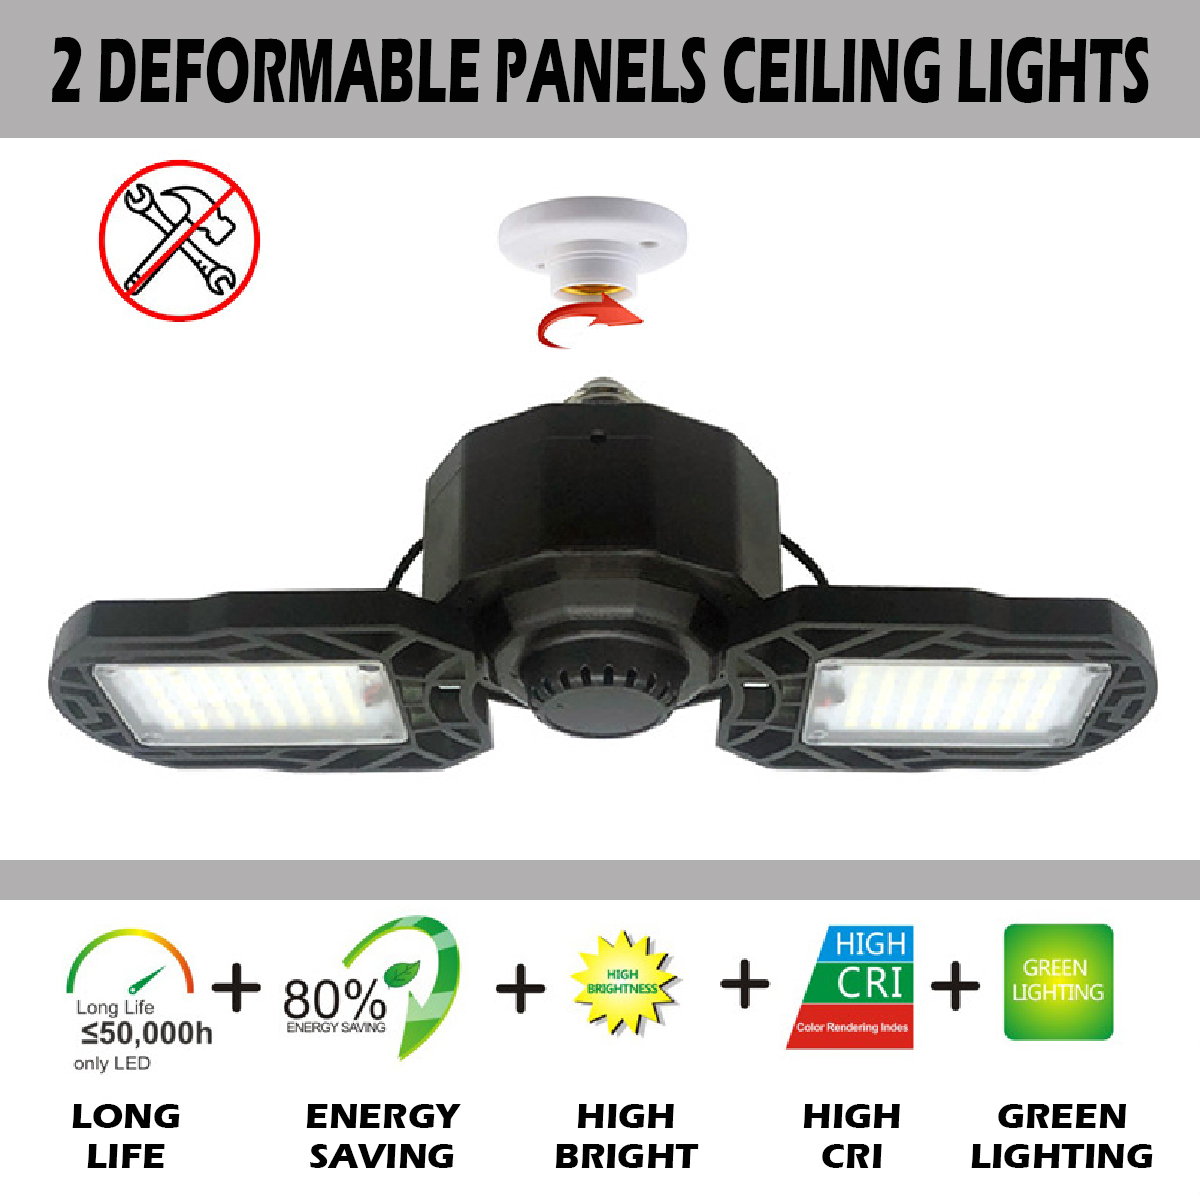 30W-LED-Garage-Lamp-3000LM-Shop-Work-E27-Light-Bulb-Home-Ceiling-Fixture-Deformable-Lighting-85-265V-1691038-6